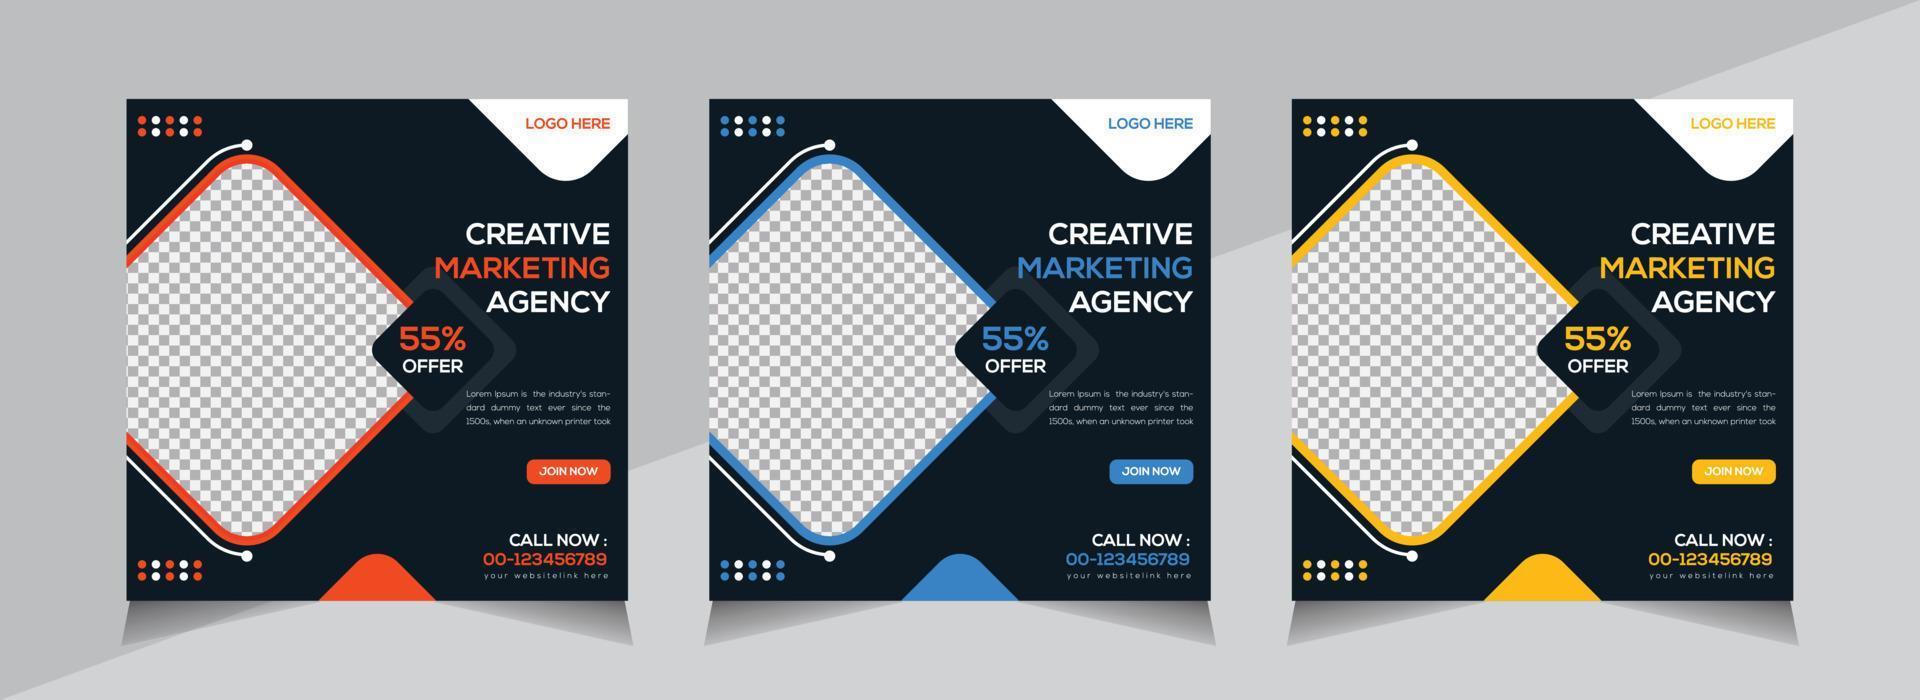 Creative Social Media banner Design, Business Social Media Post Template, Web Banner, Unique Editable, Free Vector